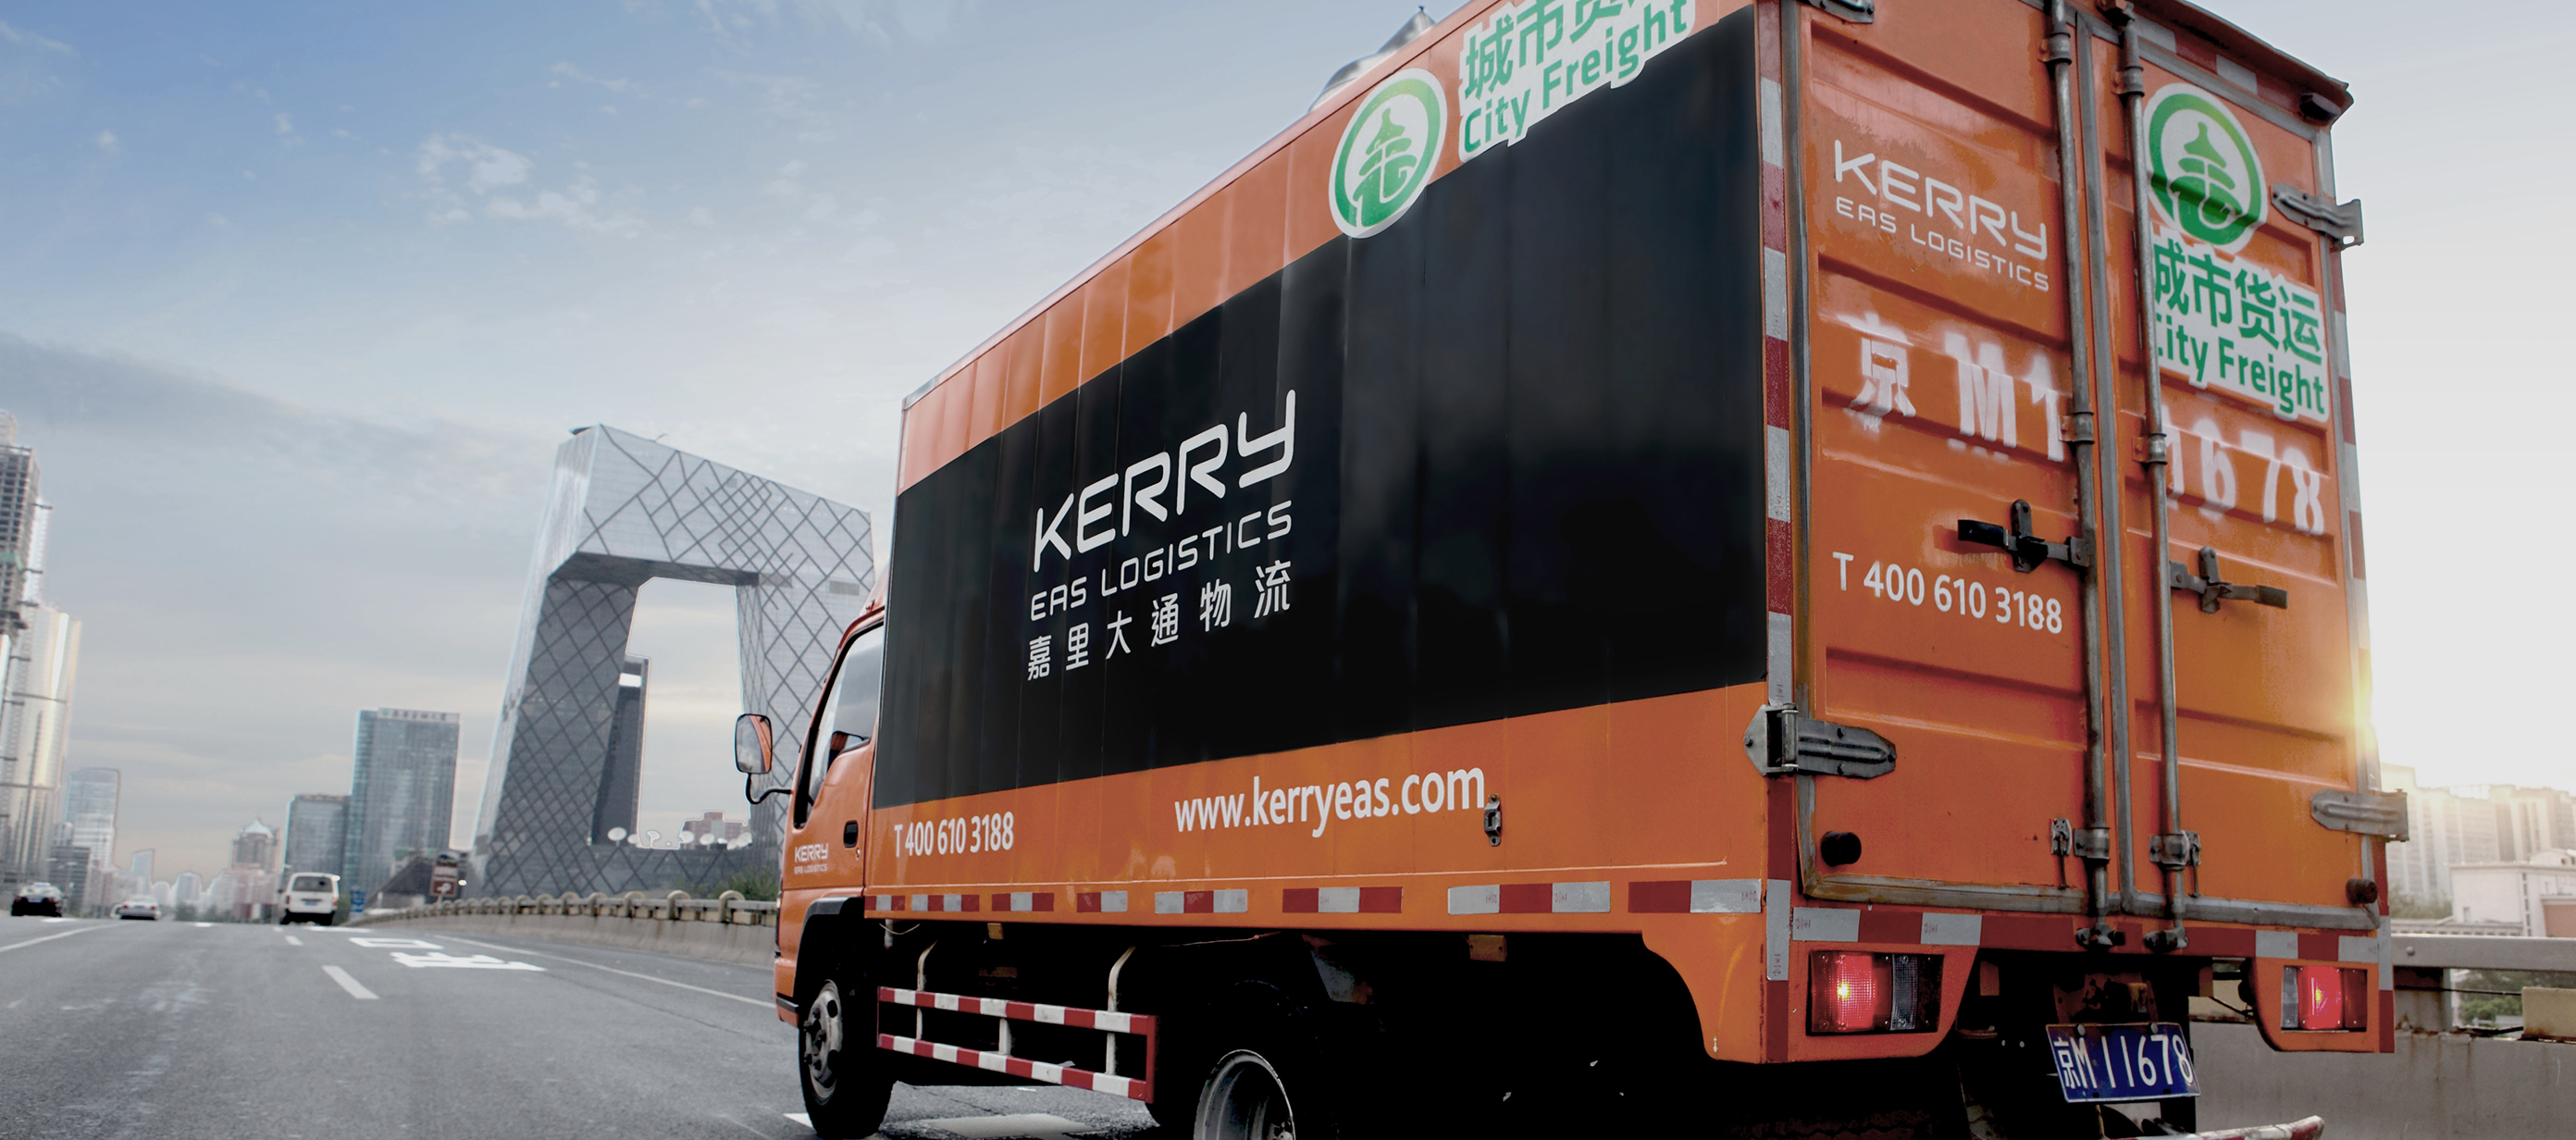 Kerry_CN Trucks